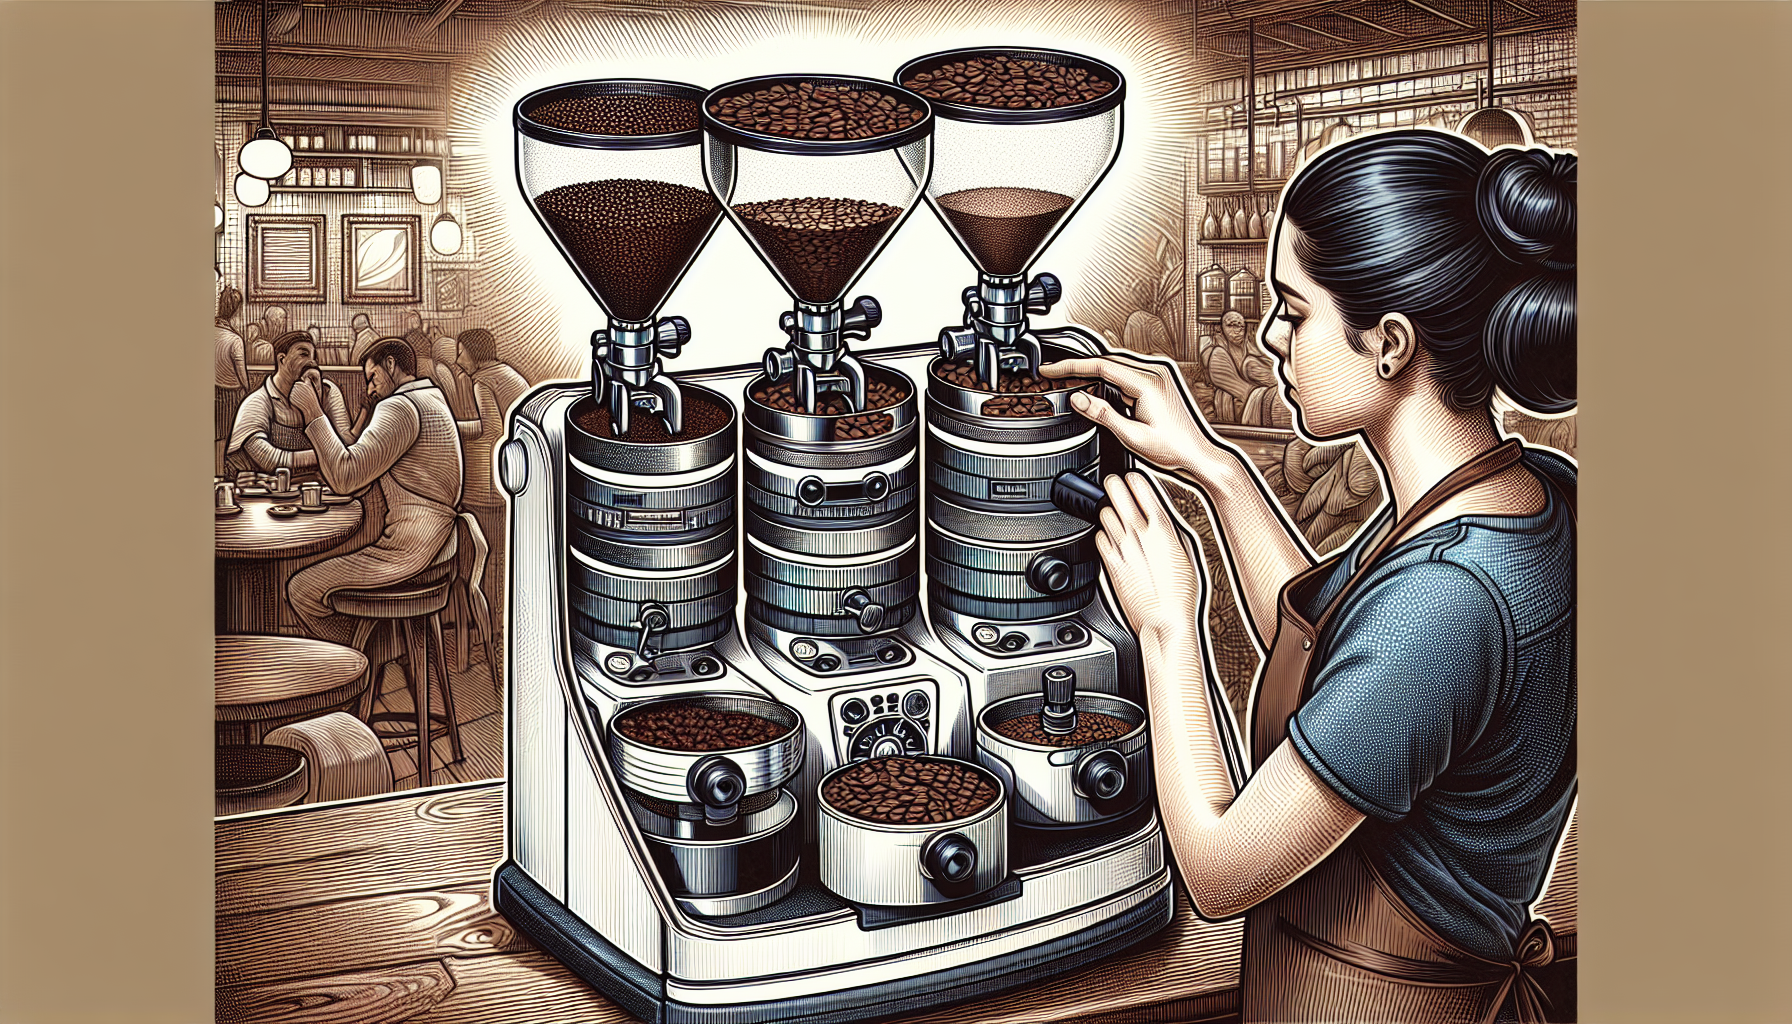 Illustration of espresso grind settings